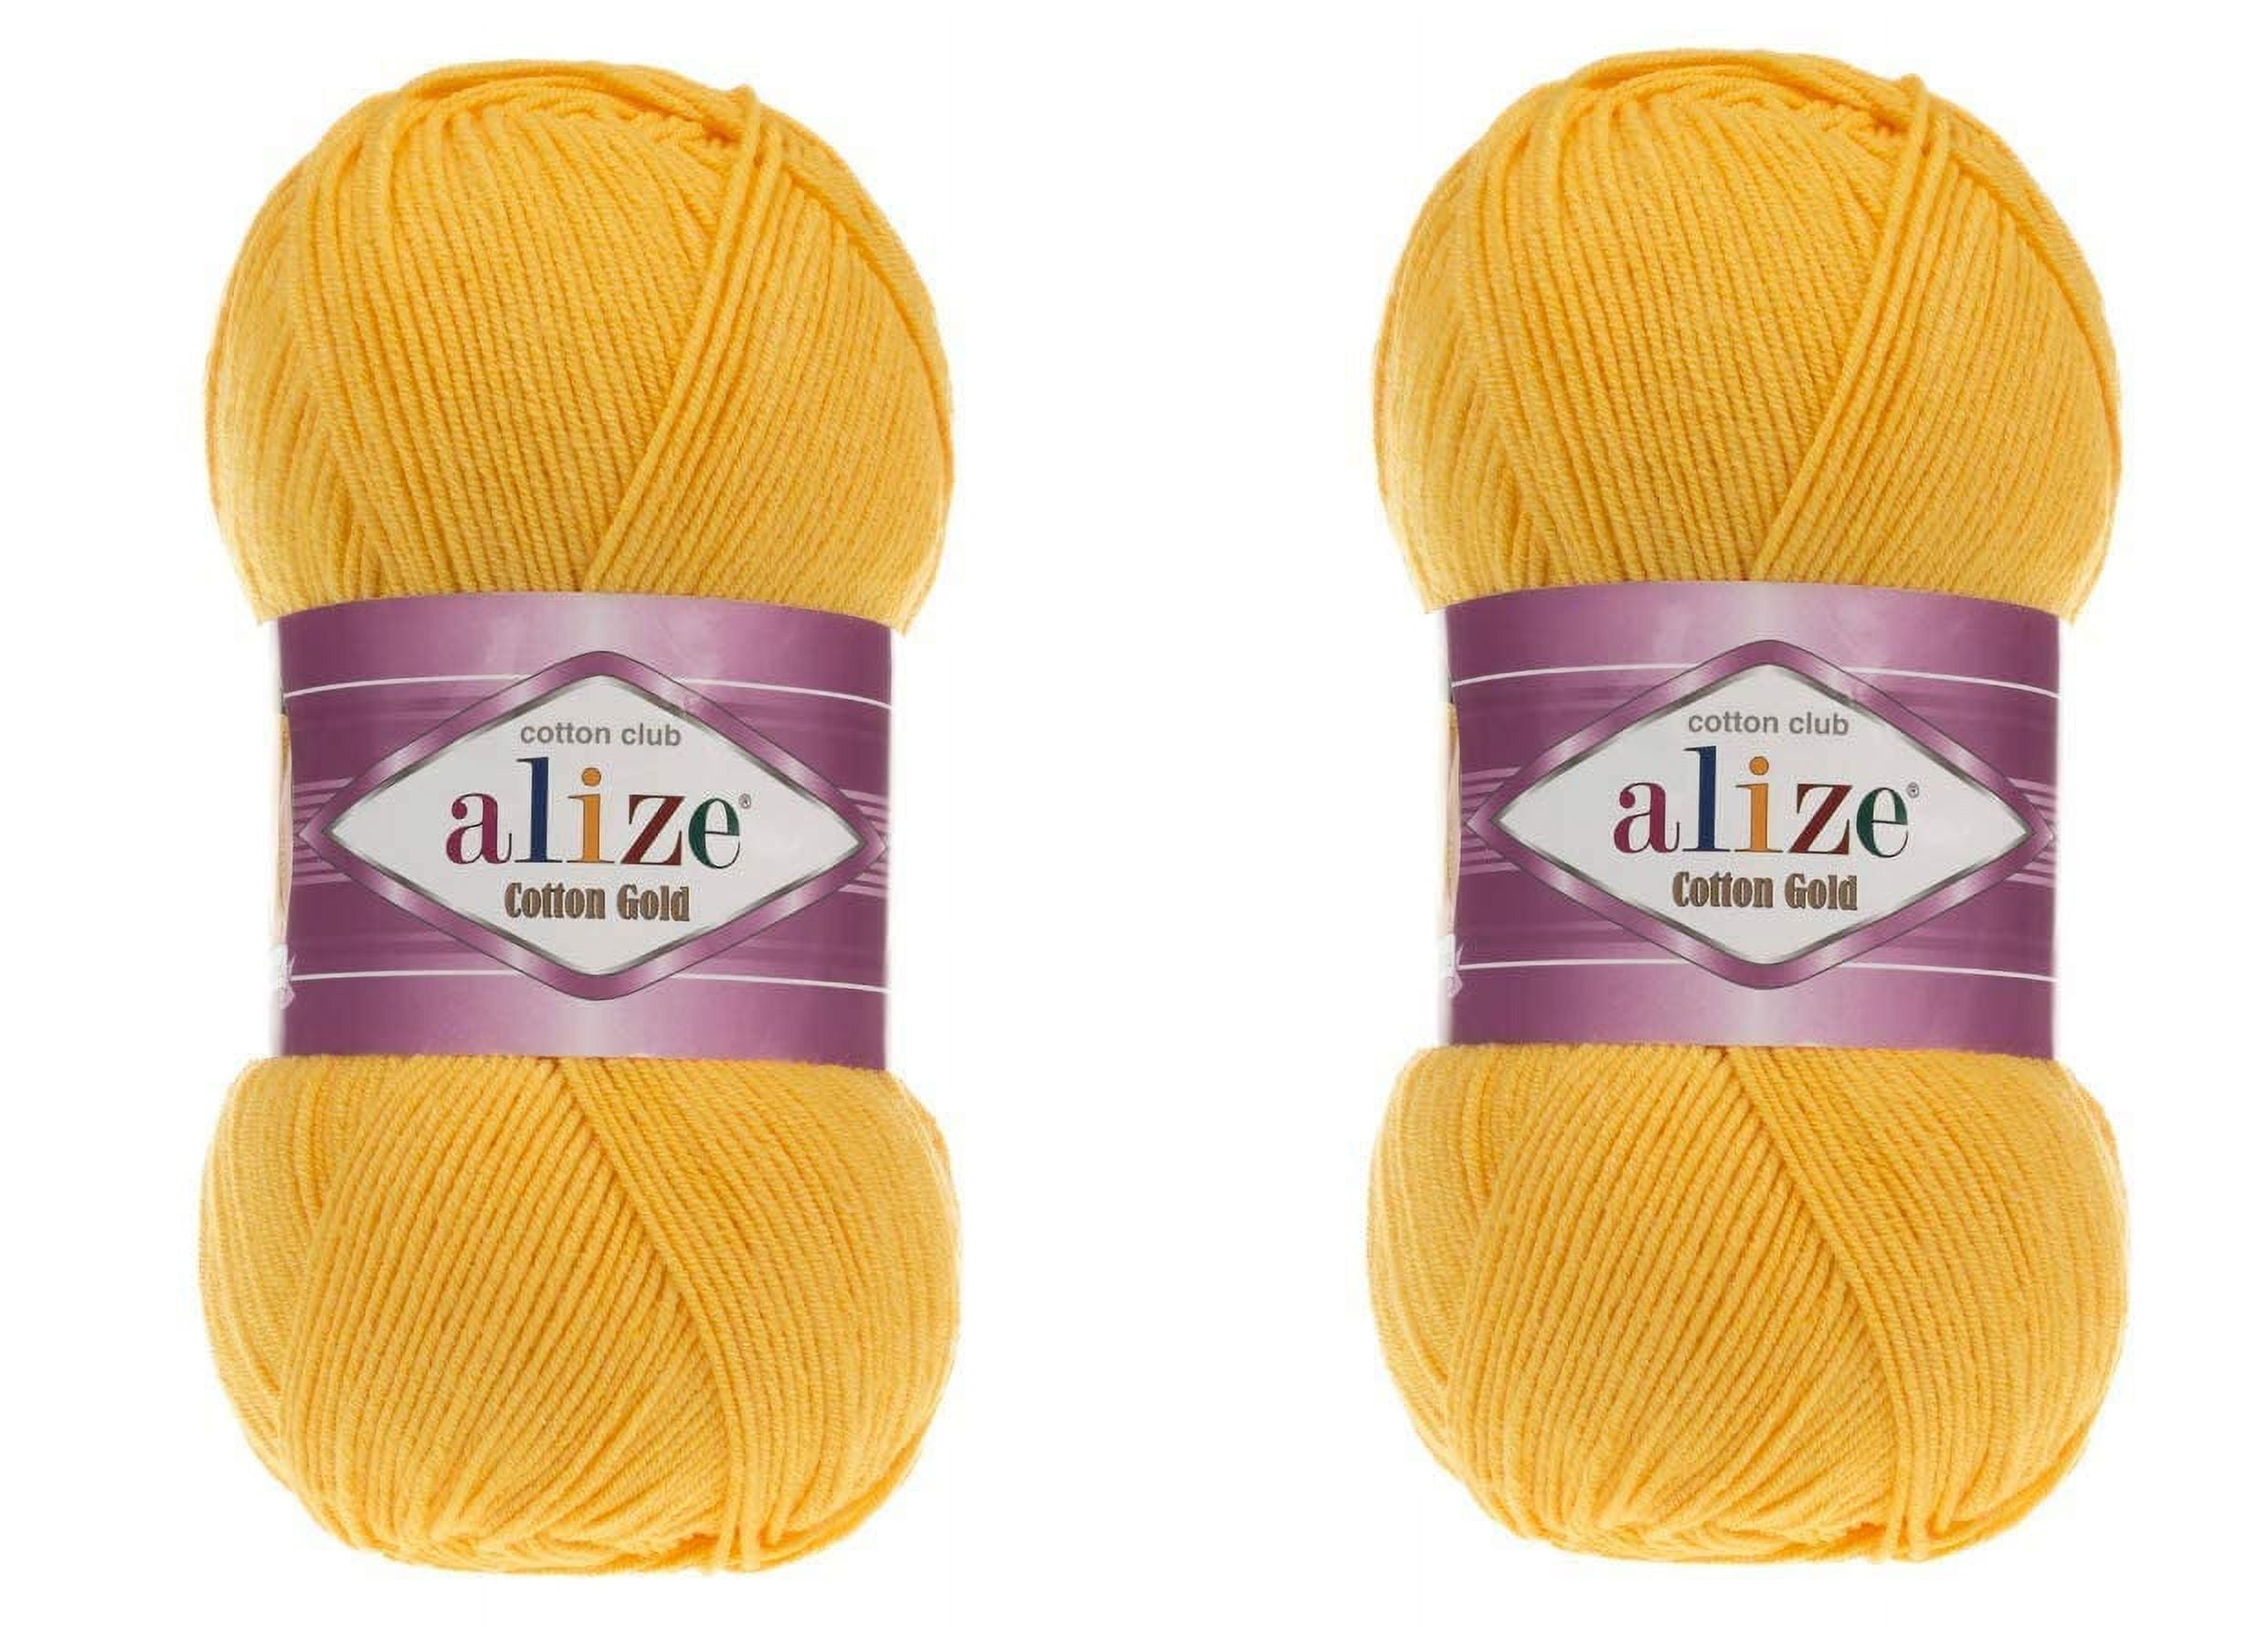 Alize Cotton Gold Yarn 55% Cotton 45% Acrylic Yarn Crochet Hand Knitting Art Lot of 2 Skeins 200gr 722yds (216-DARK Yellow)